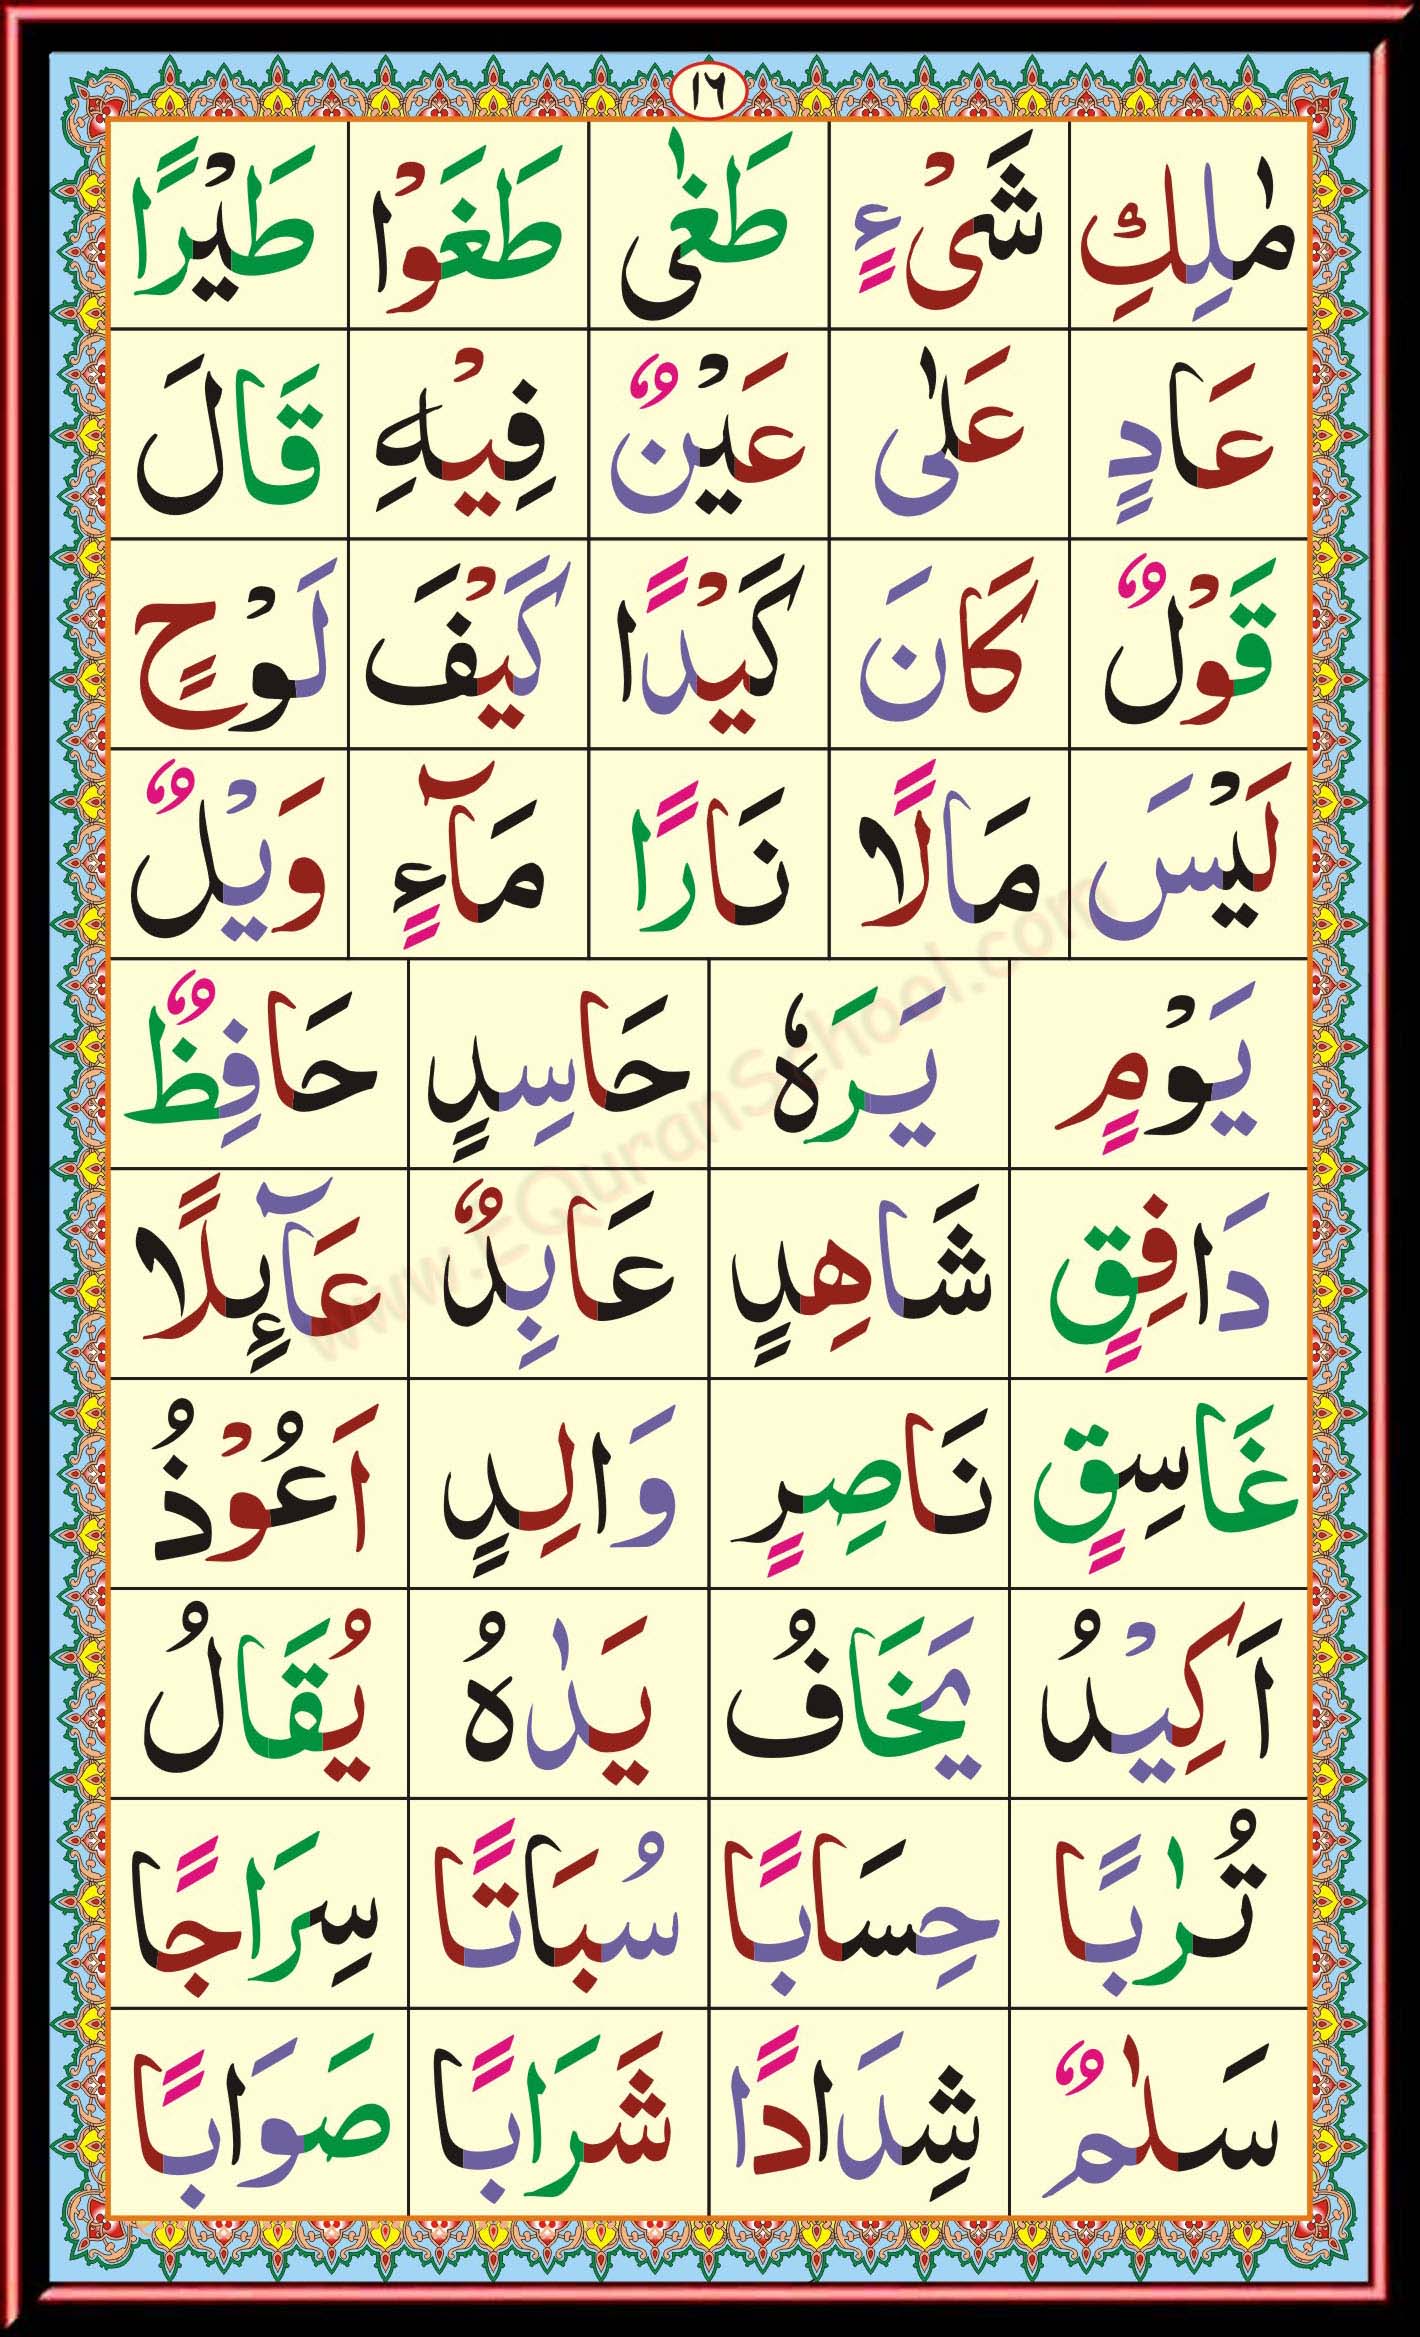 Read Quran Online with Translations in Urdu, Arabic English